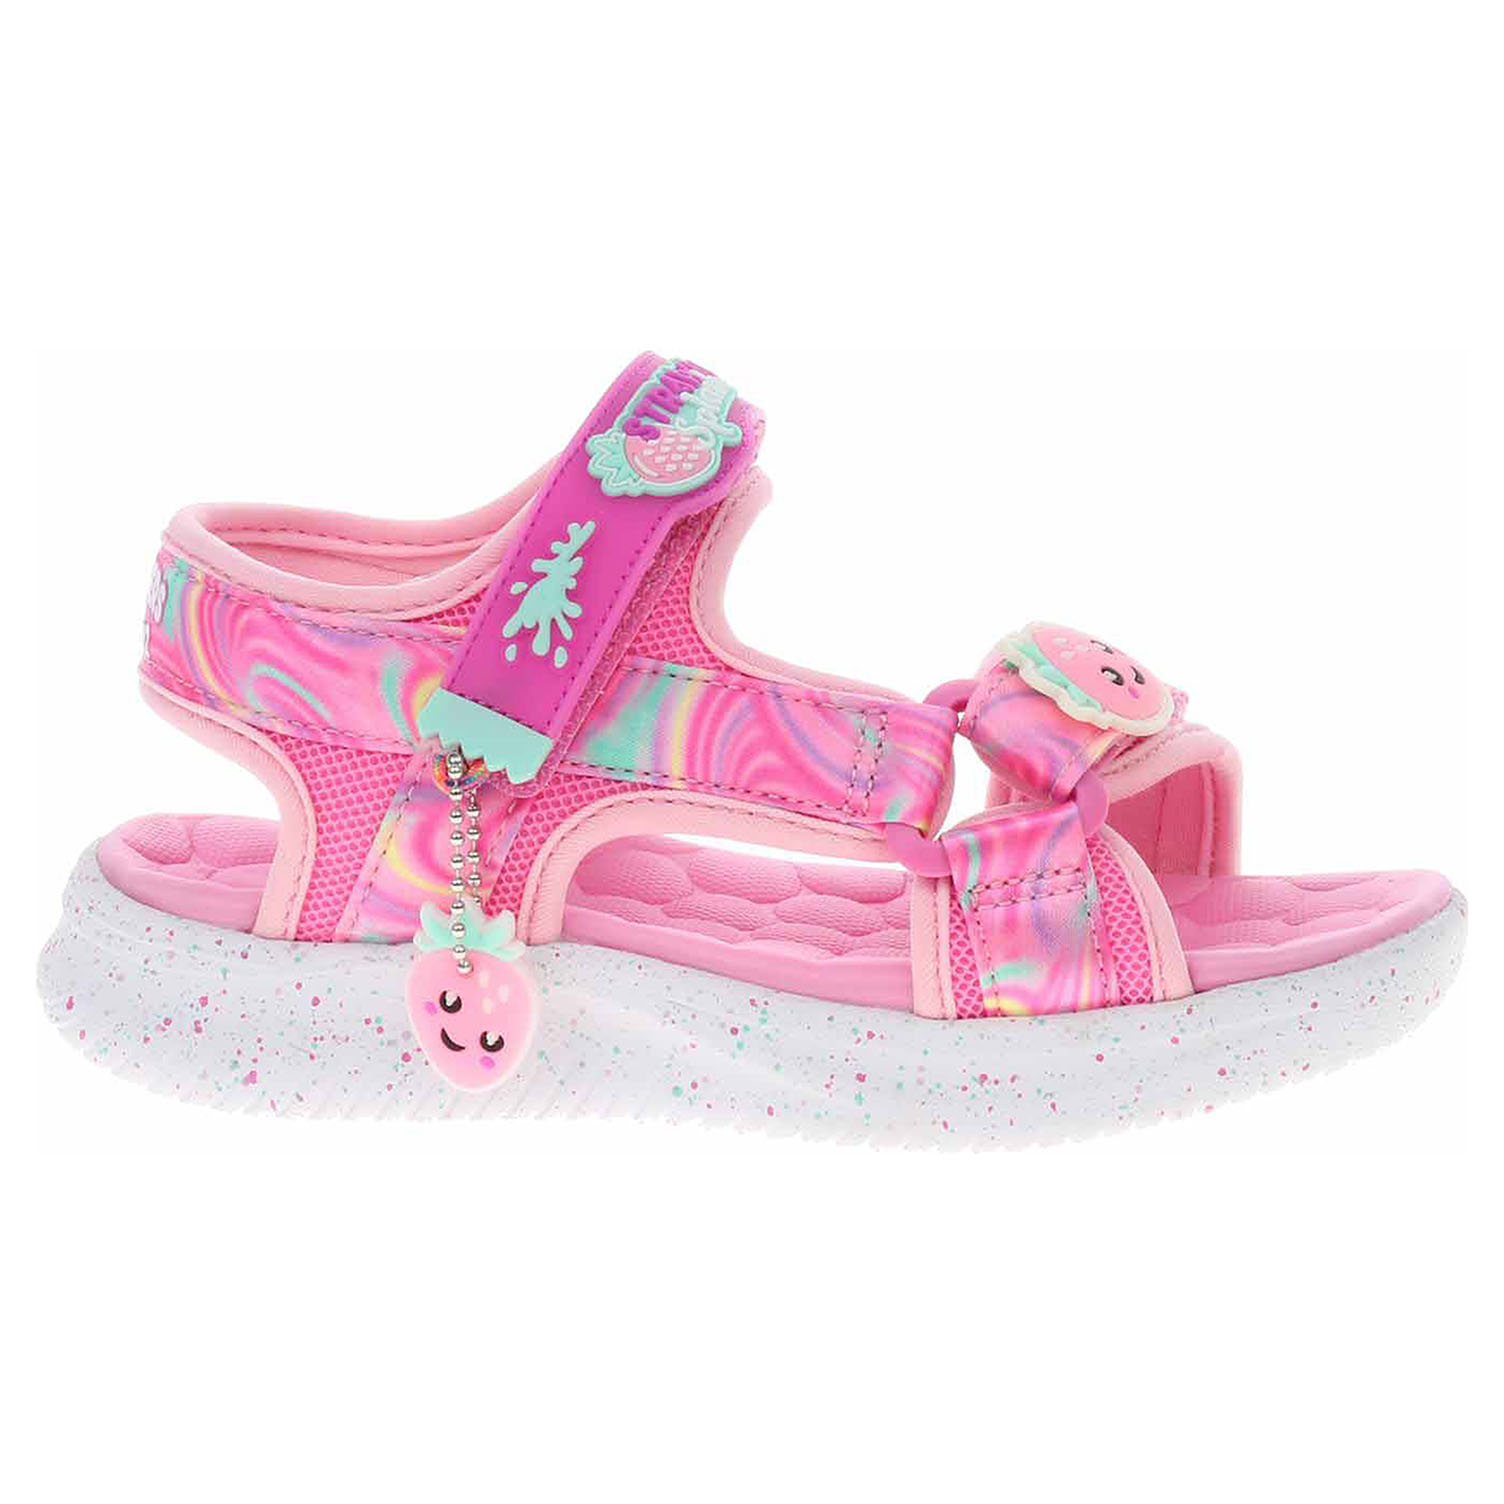 Skechers Jumpsters Sandal - Splasherz pink-multi 29